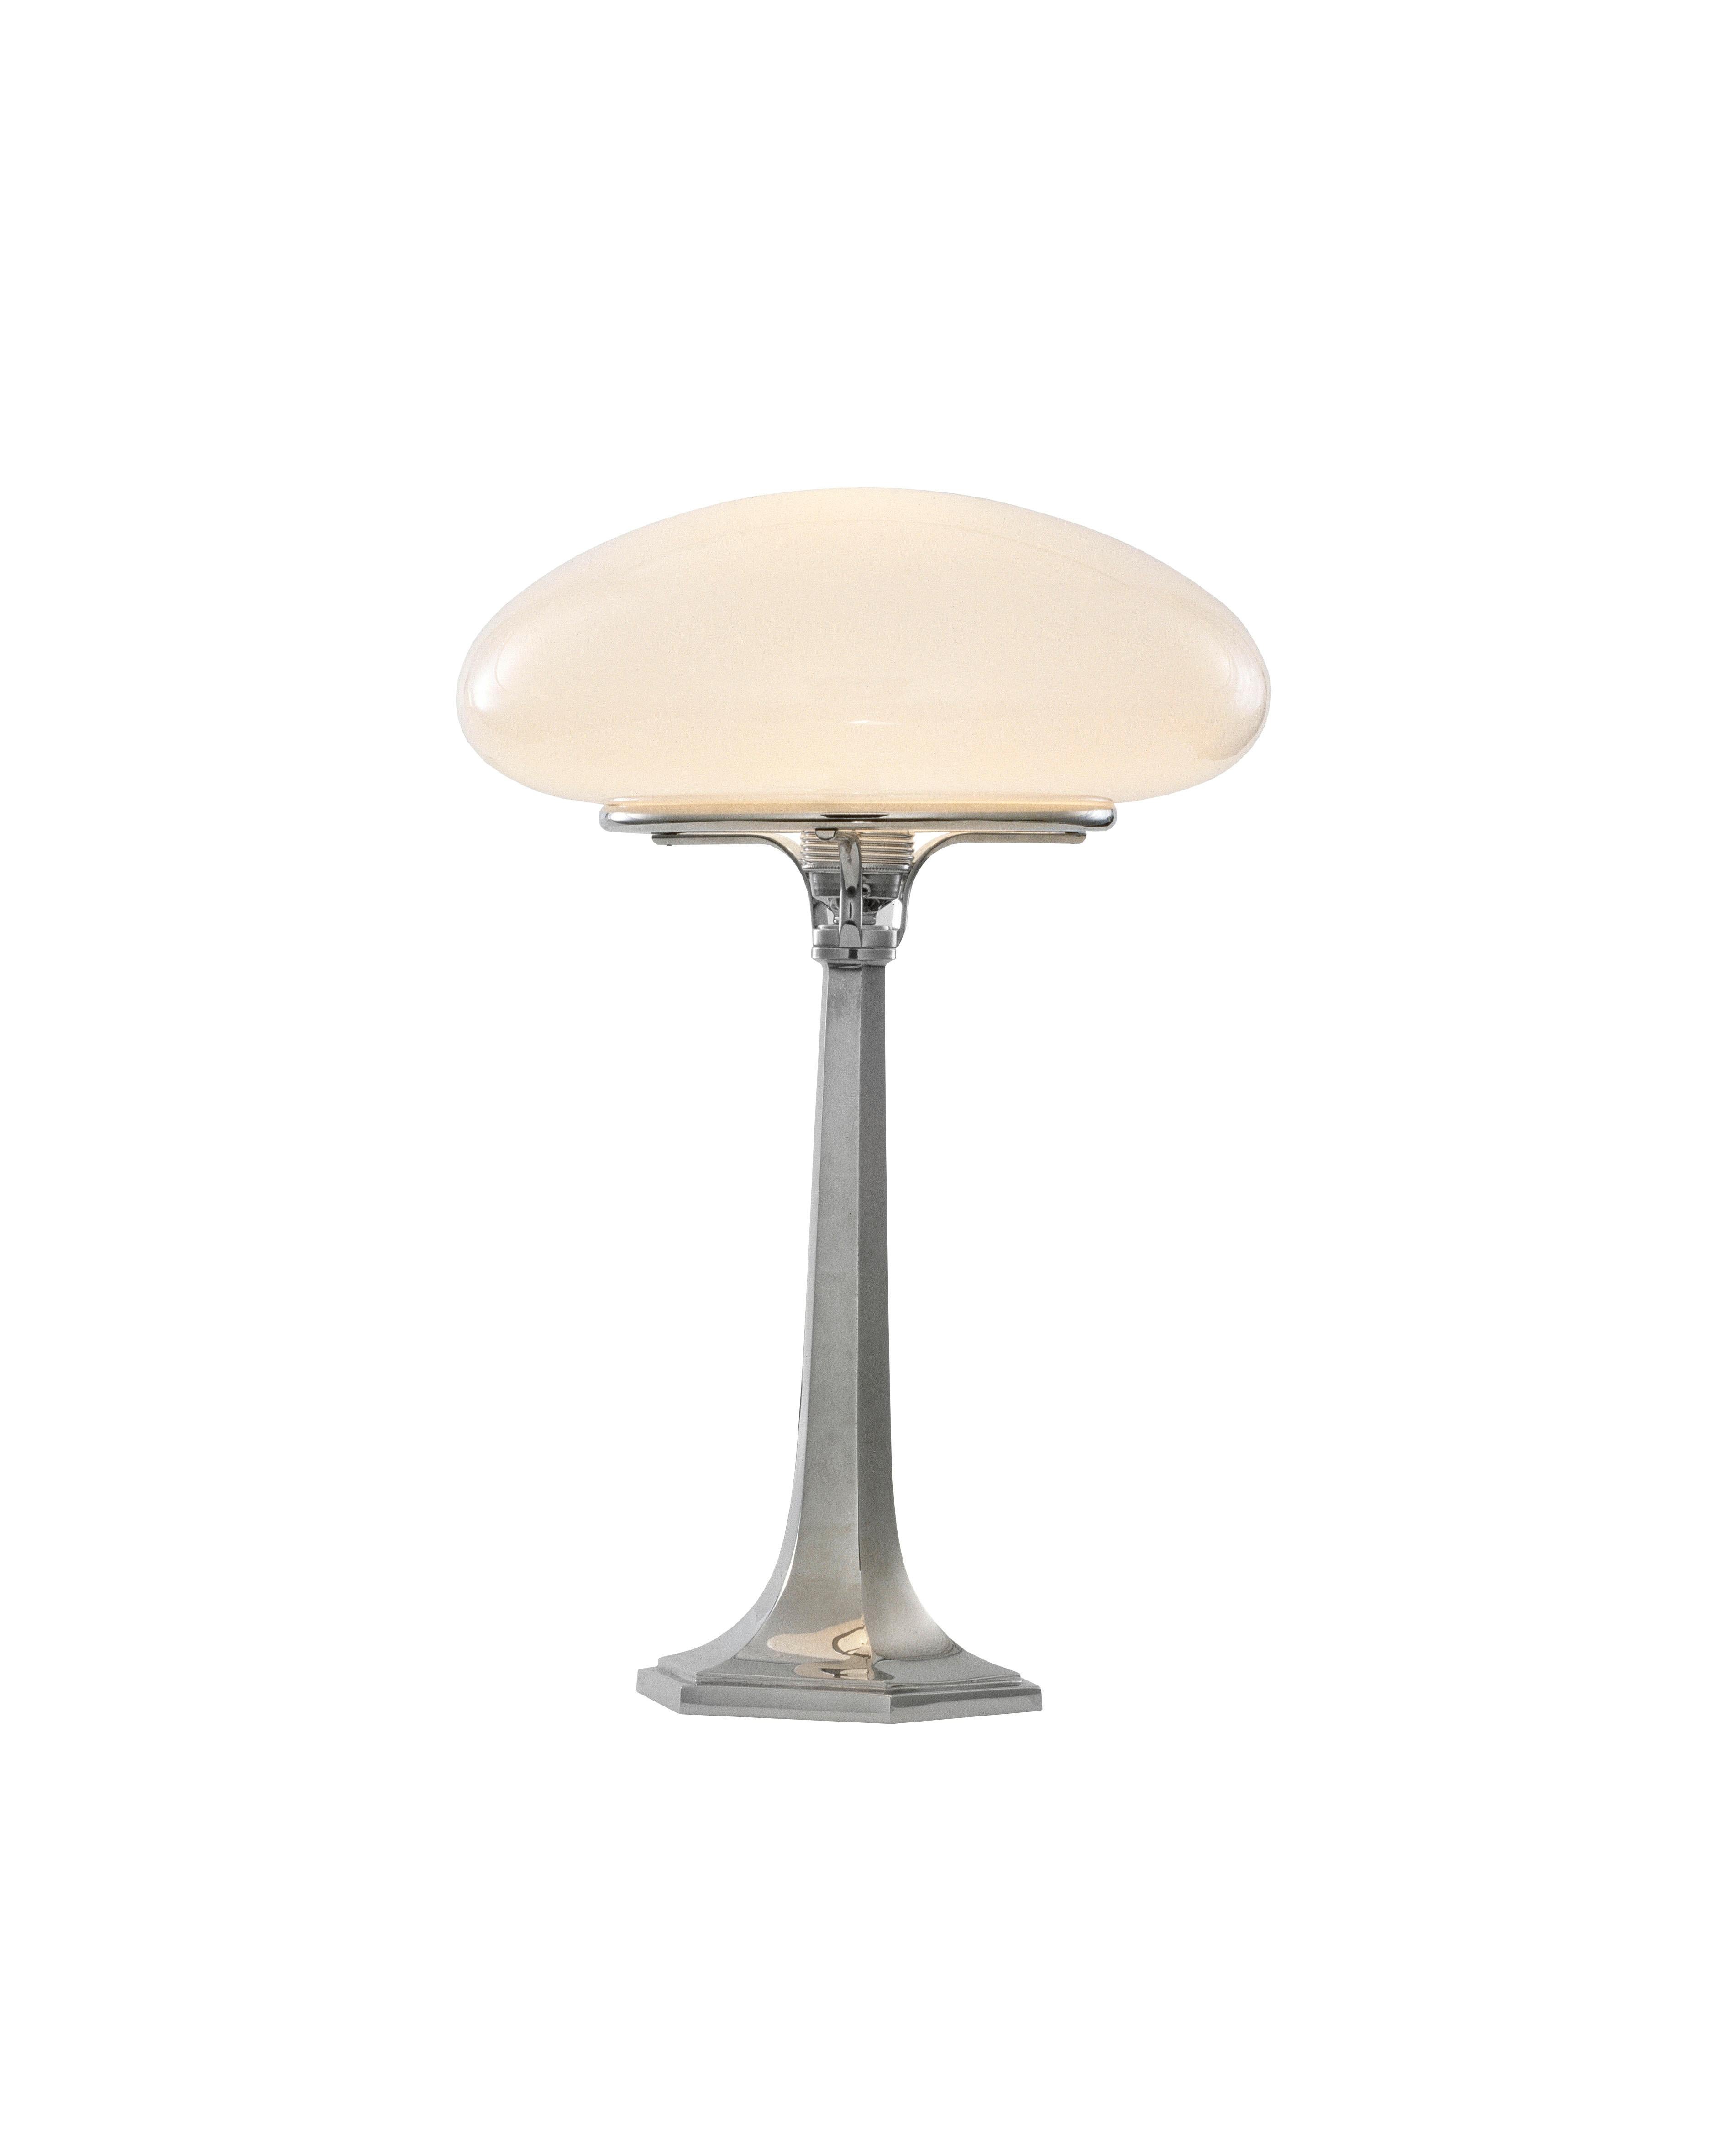 Jugendstil Josef Hoffmann Table Lamp with Opaline Glass Shade, Re Edition For Sale